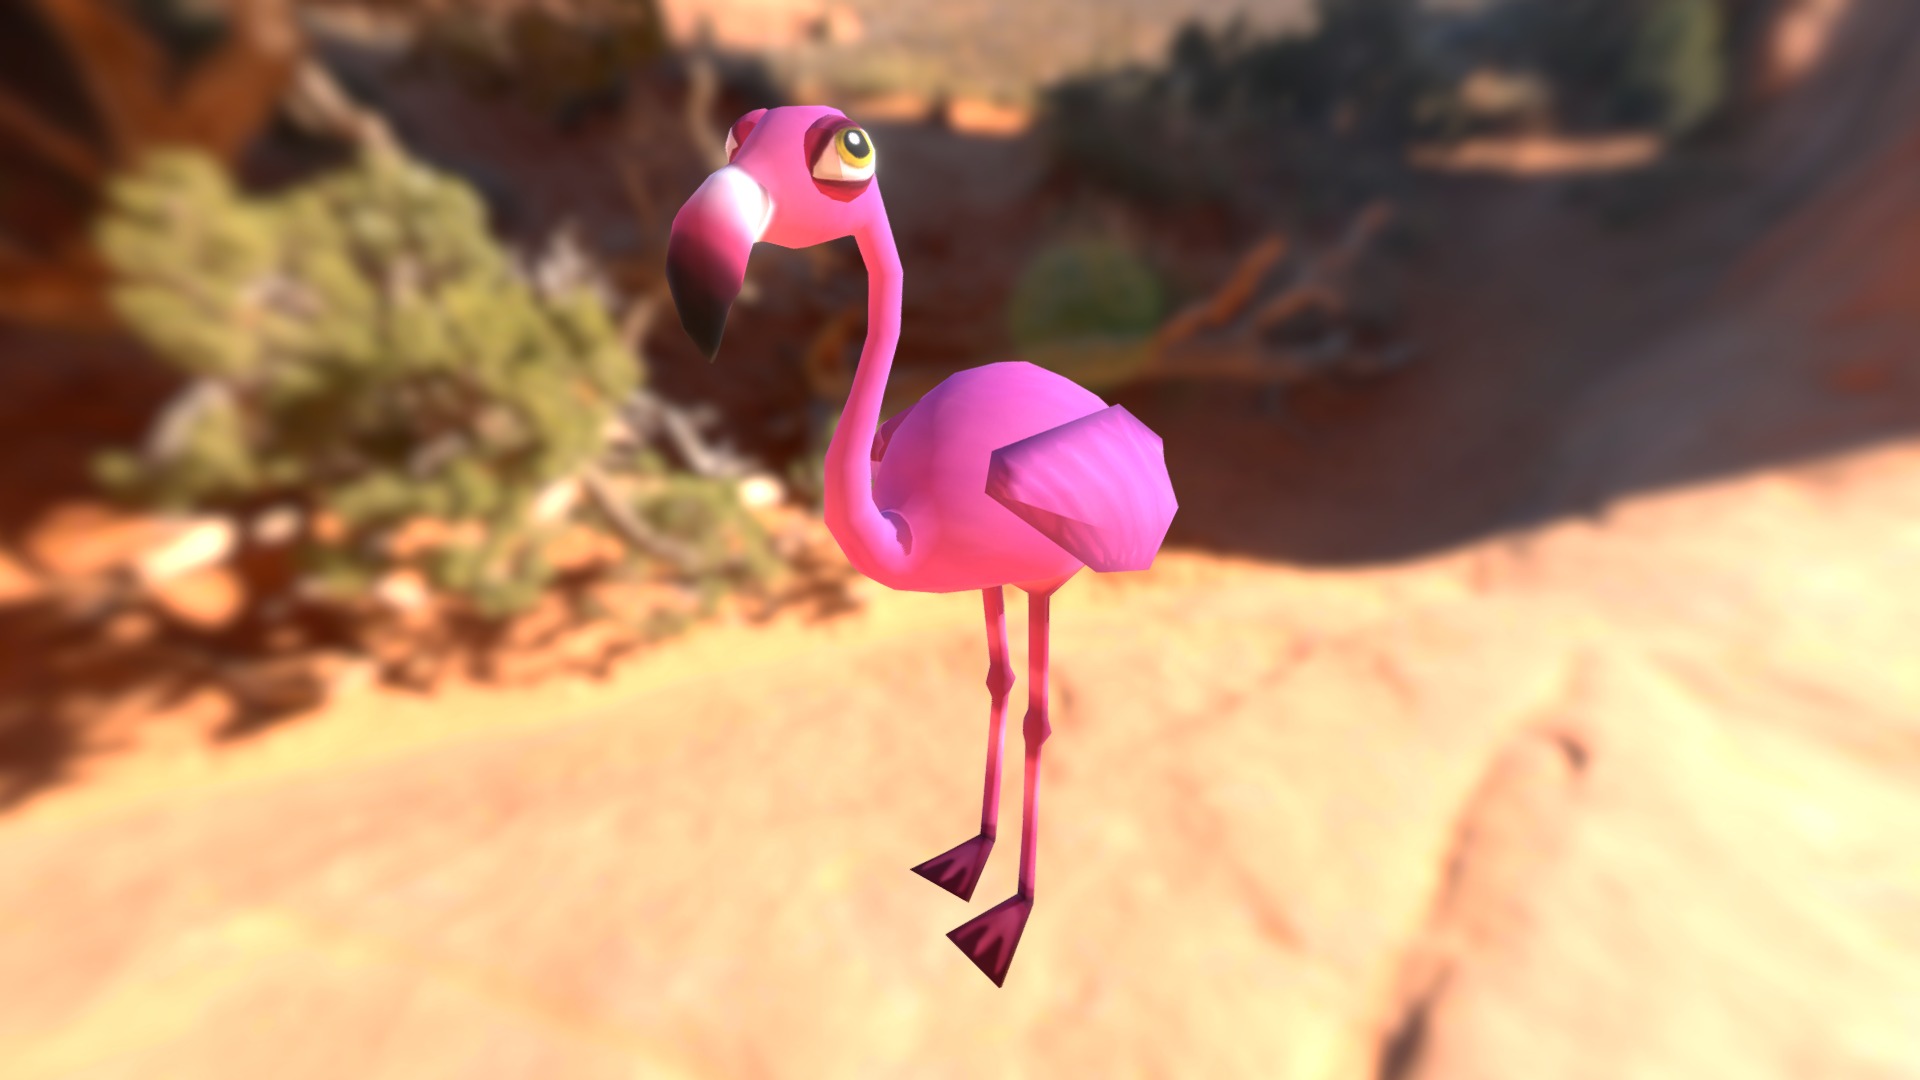 Flamingo | Idle Animation | Low Poly